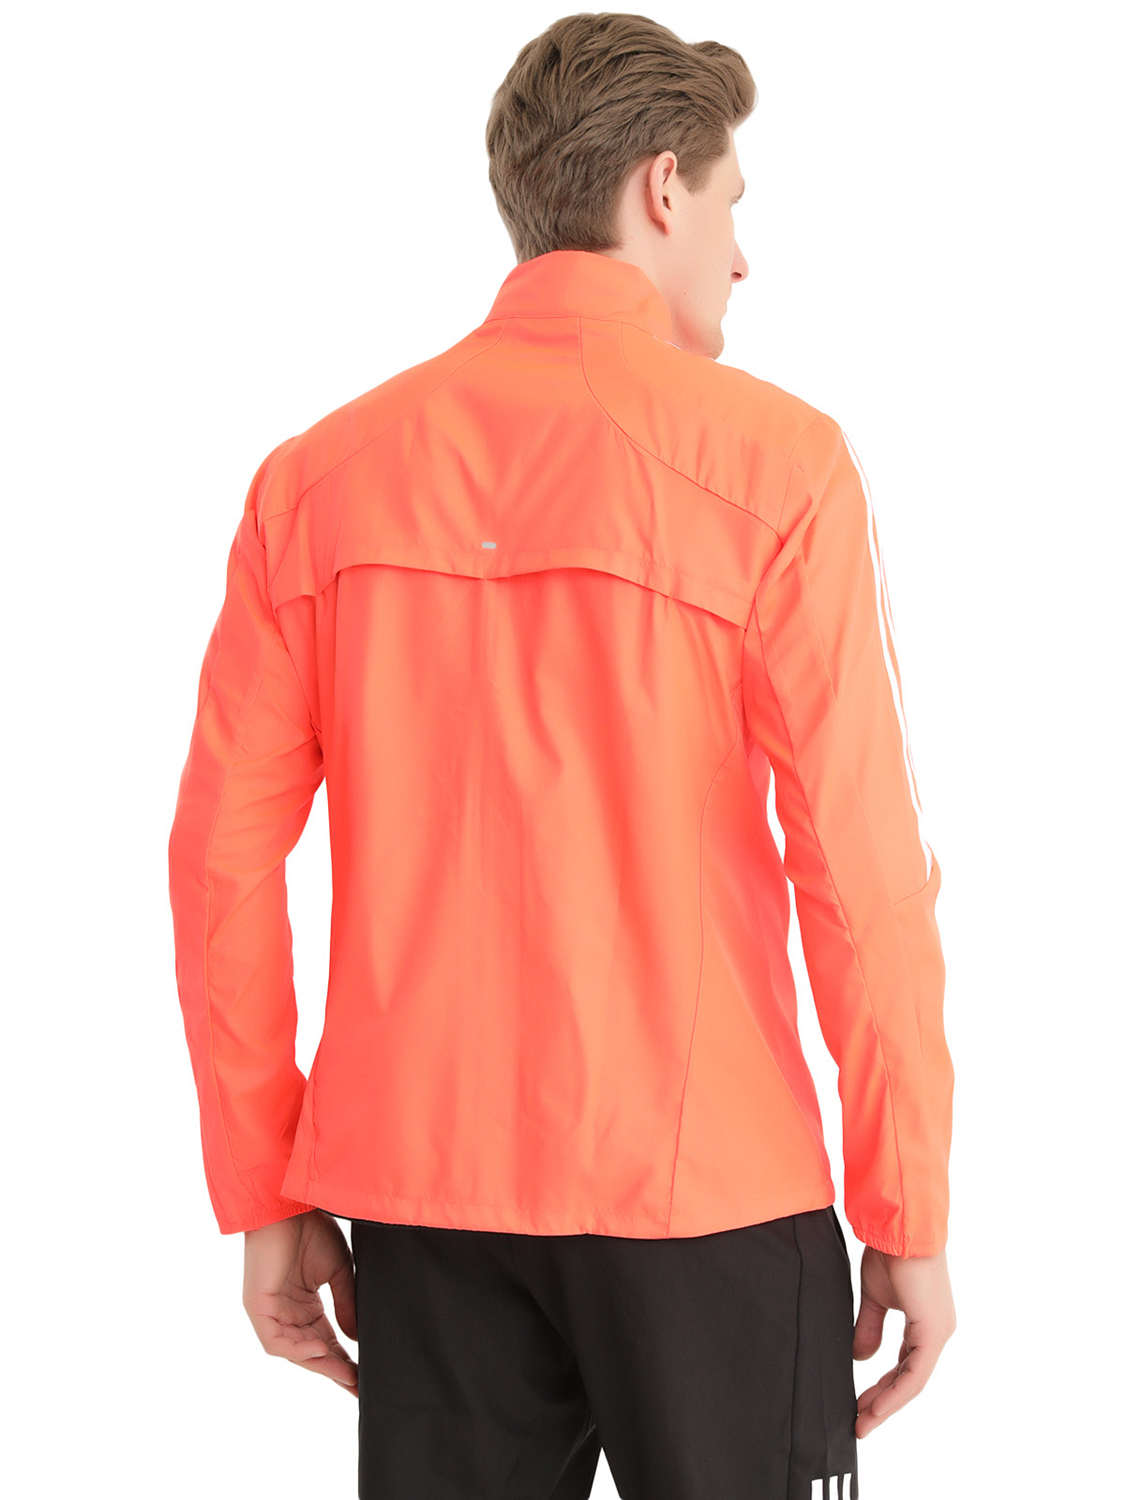 Куртка беговая Adidas Marathon App Solar Red/White